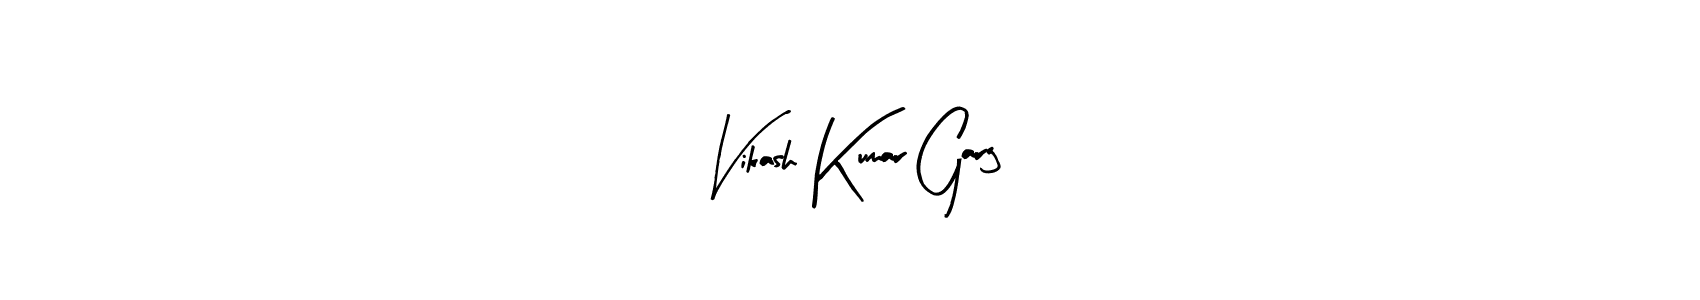 Make a beautiful signature design for name Vikash Kumar Garg. Use this online signature maker to create a handwritten signature for free. Vikash Kumar Garg signature style 8 images and pictures png